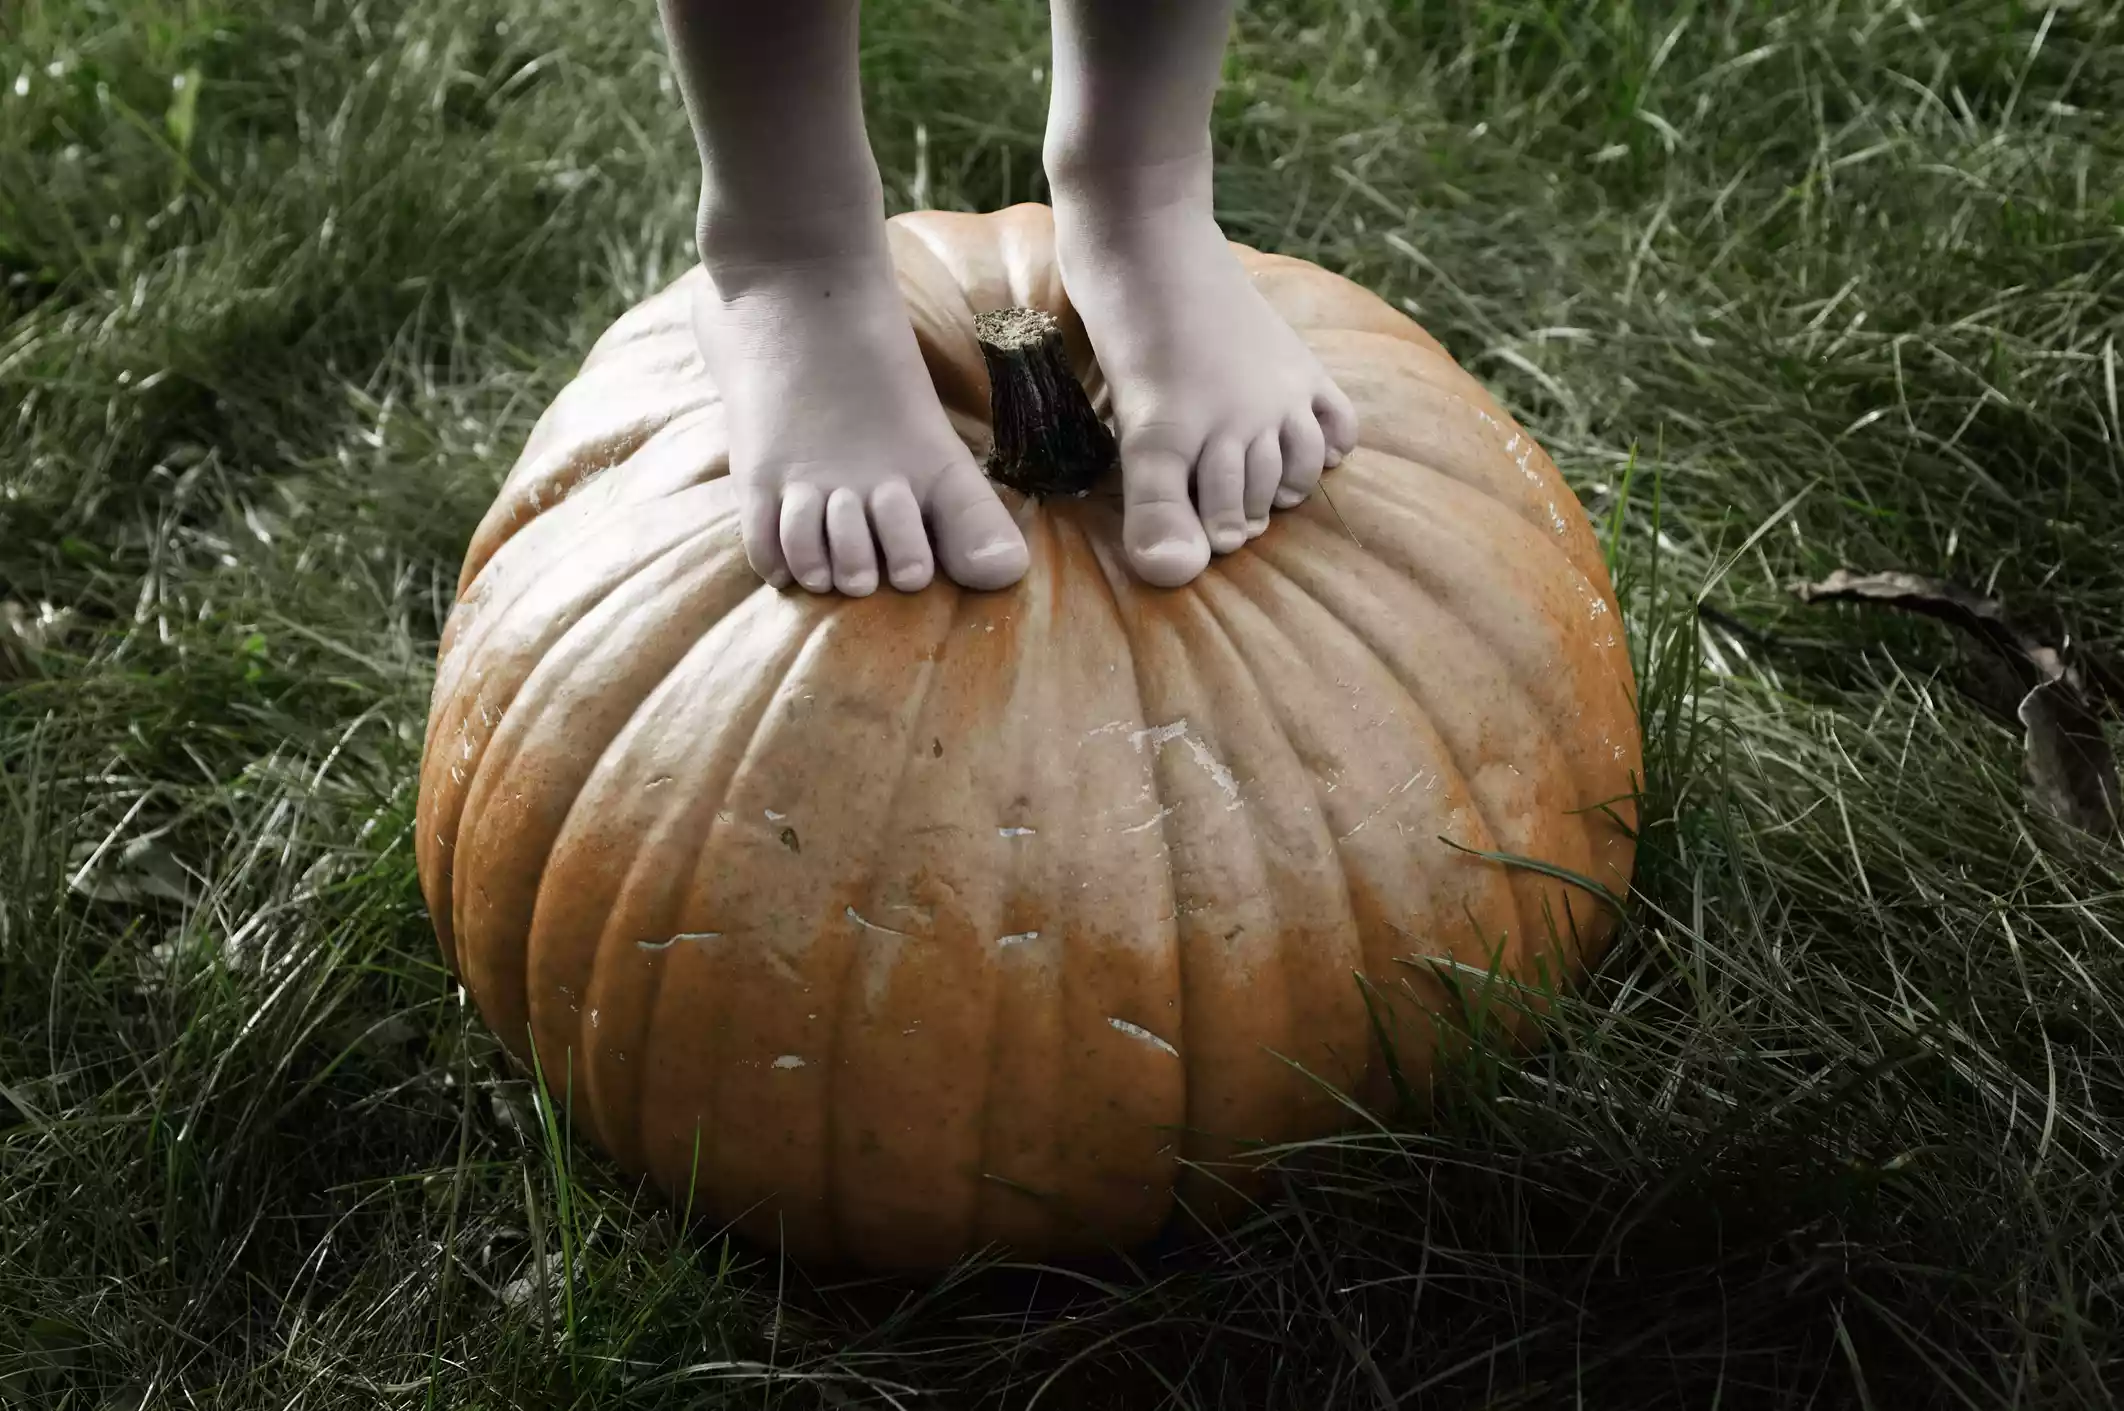 Child's feet standing on a large pumpkin outdoors.